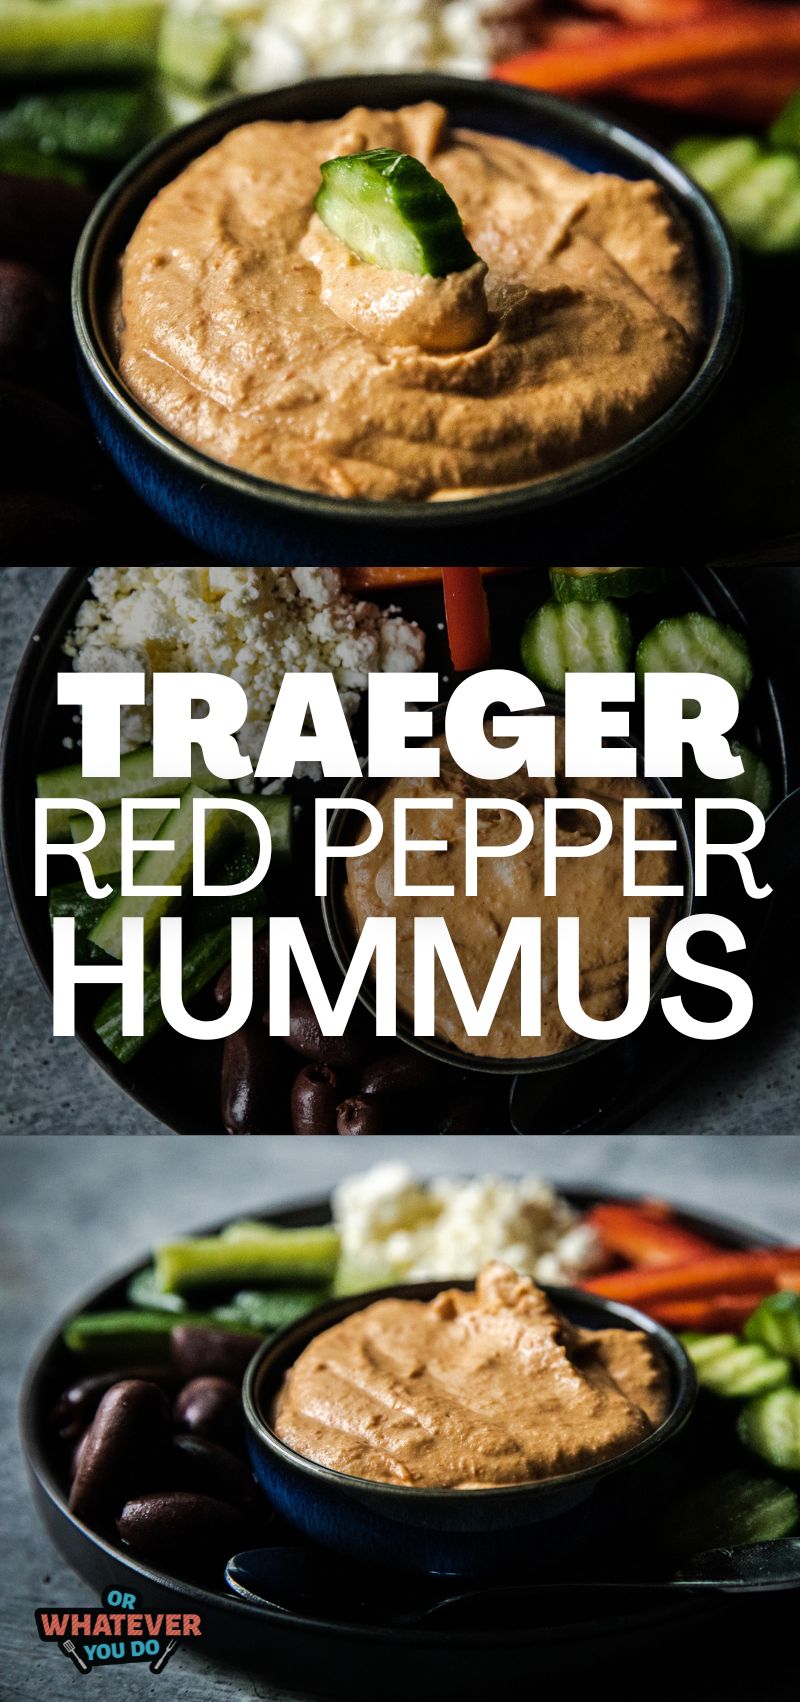 Traeger Red Pepper Hummus